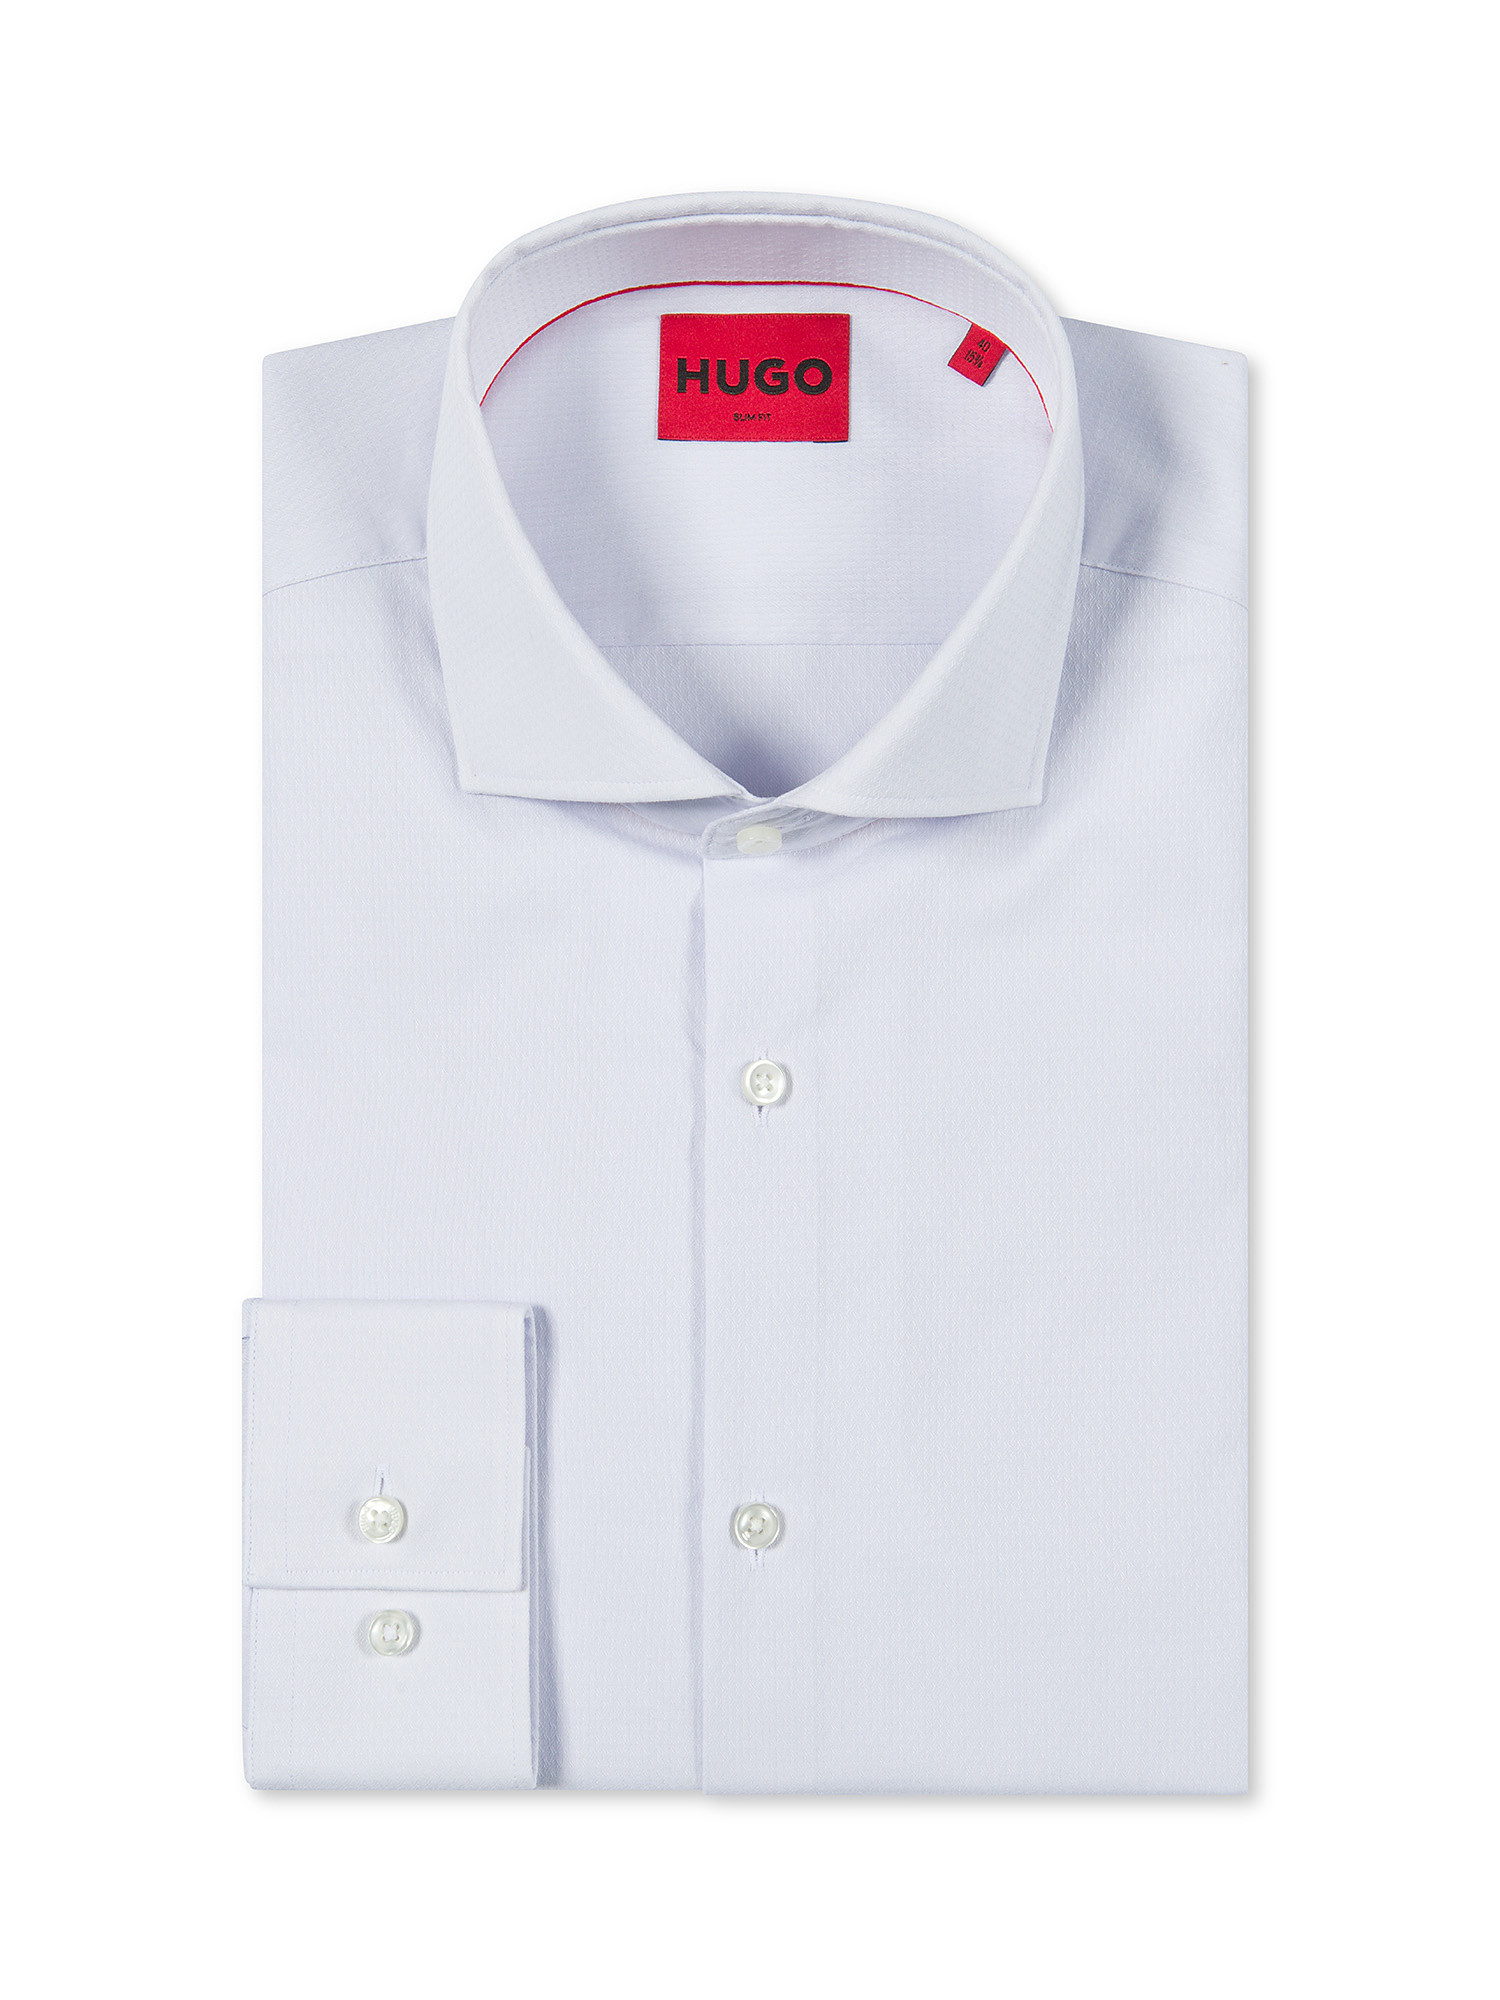 Hugo - Slim fit poplin cotton shirt, White, large image number 0